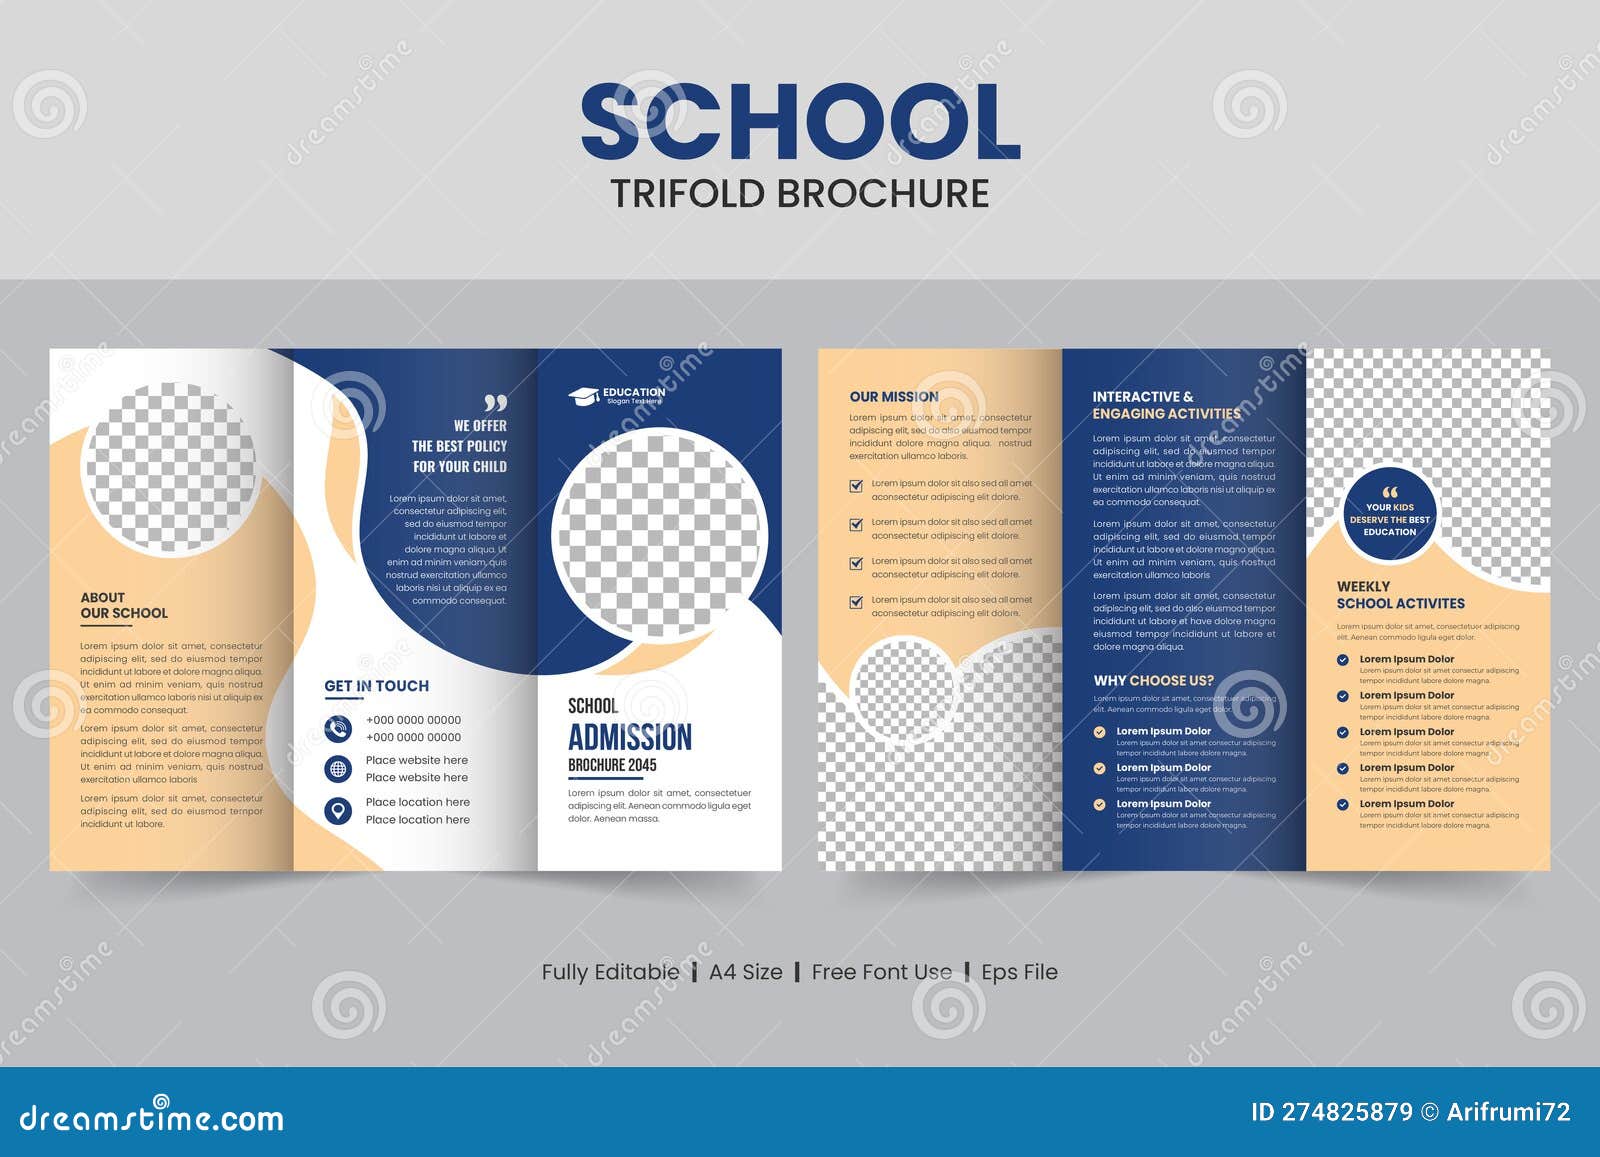 education leaflet template